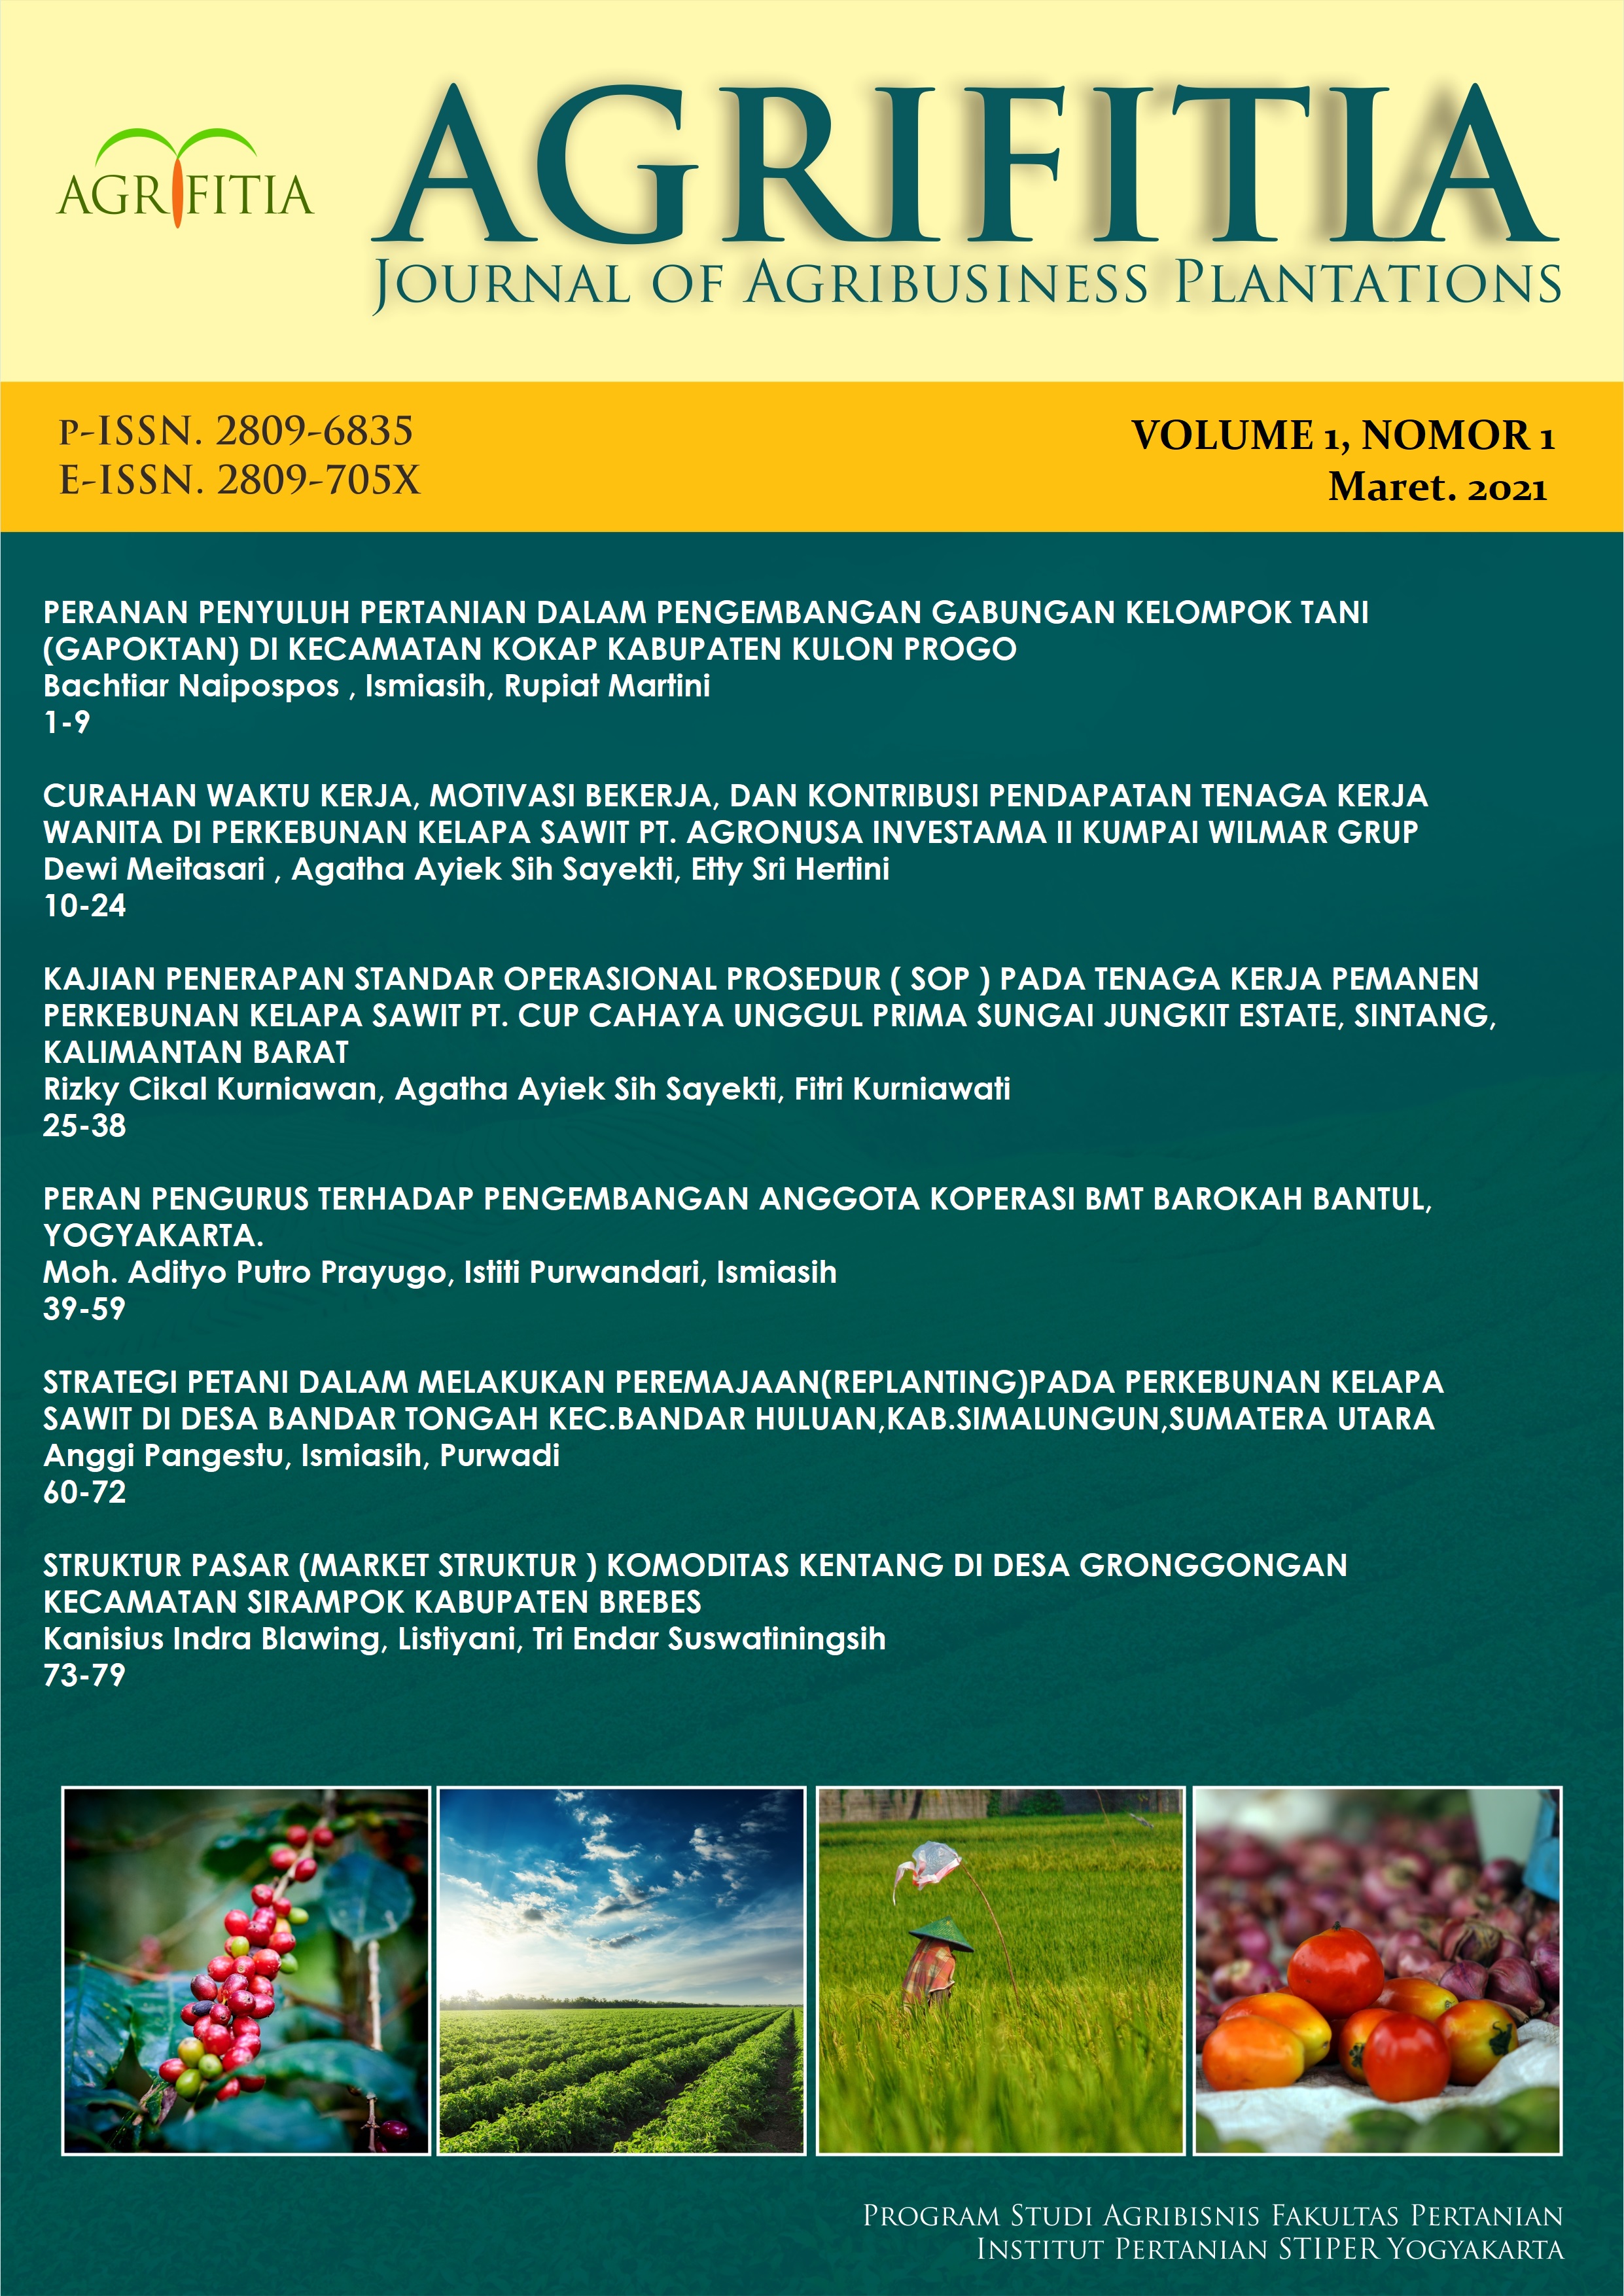 AGRIFITIA: Journal of Agribusiness Plantations